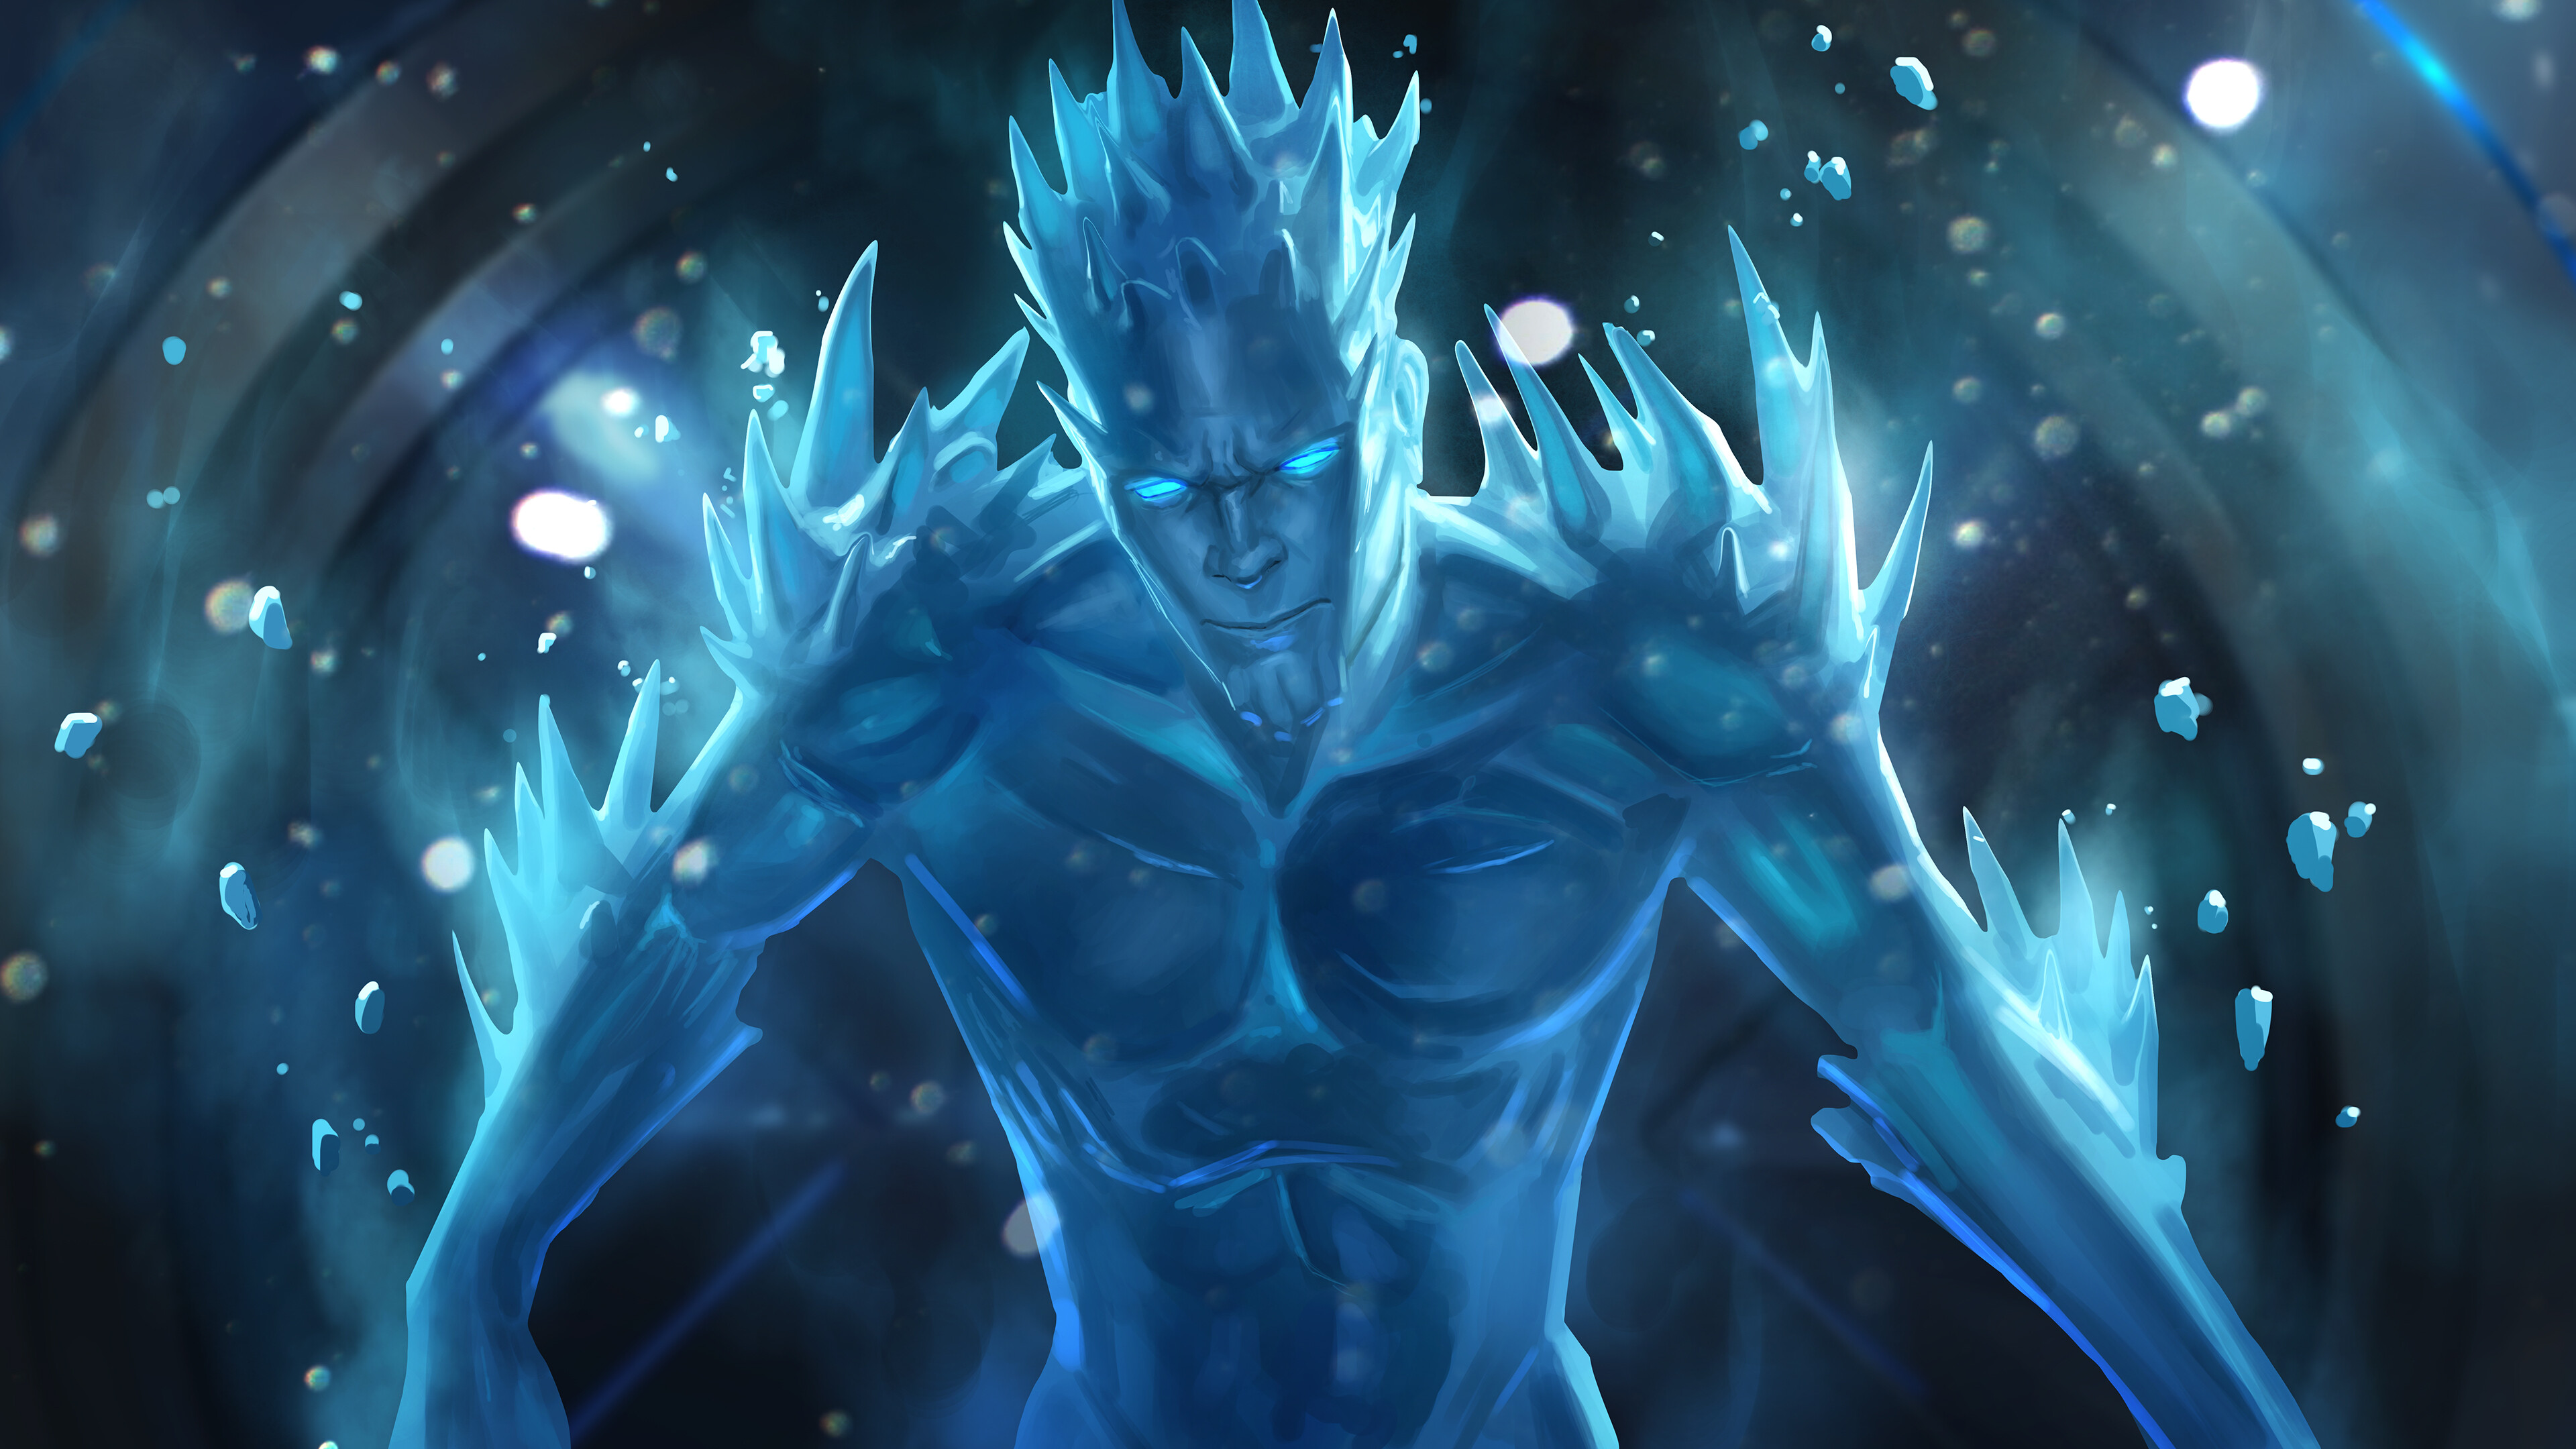 Iceman, Contest of Champions, Mobile game, Superhero wallpapers, 3840x2160 4K Desktop